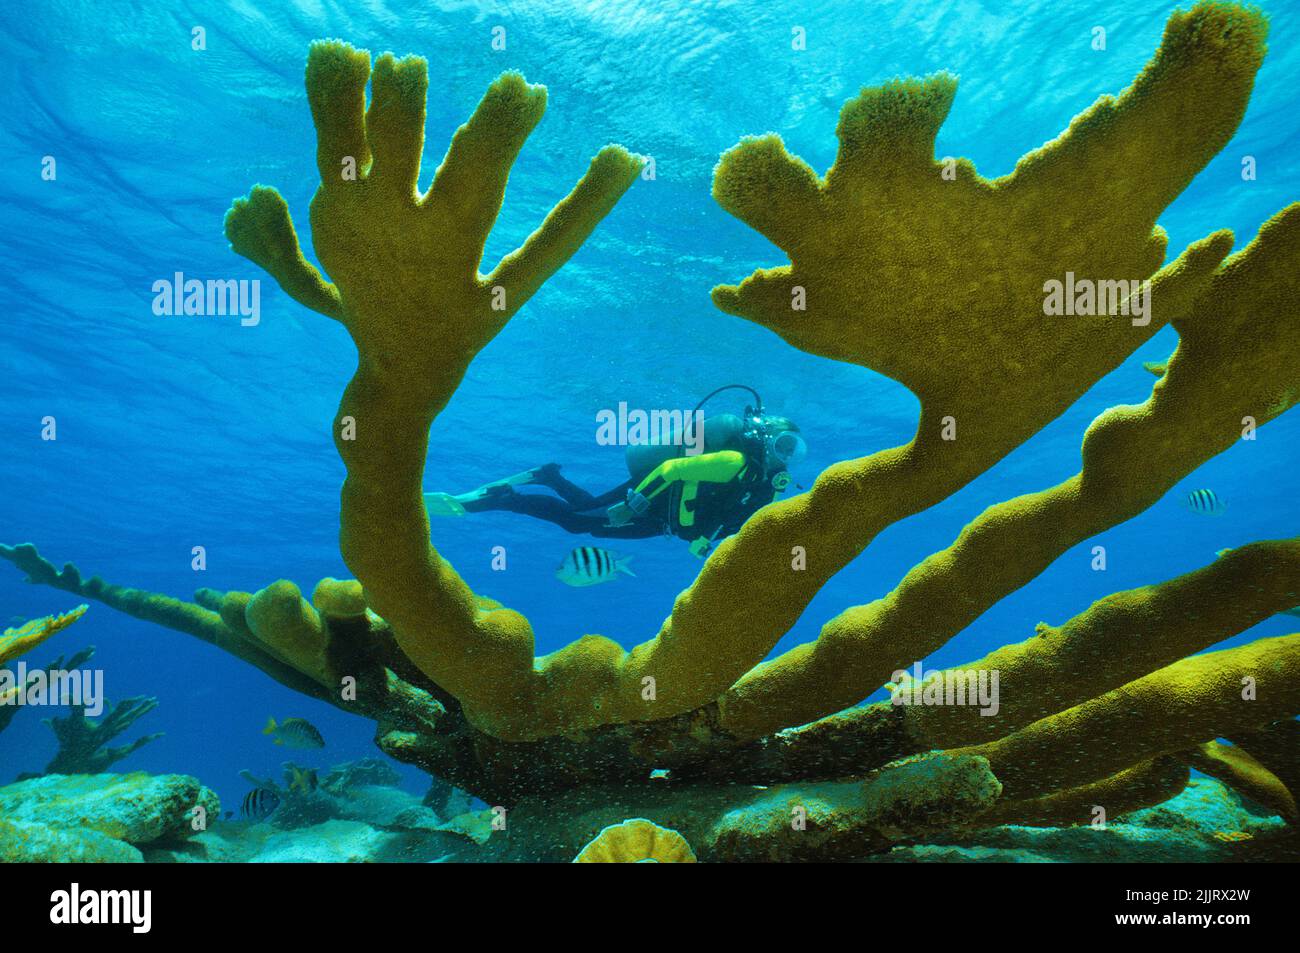 Immersioni subacquee tra coralli Elkhorn (Acropora palmata) in una barriera corallina caraibica, Saba, Antille Olandesi, Caraibi Foto Stock